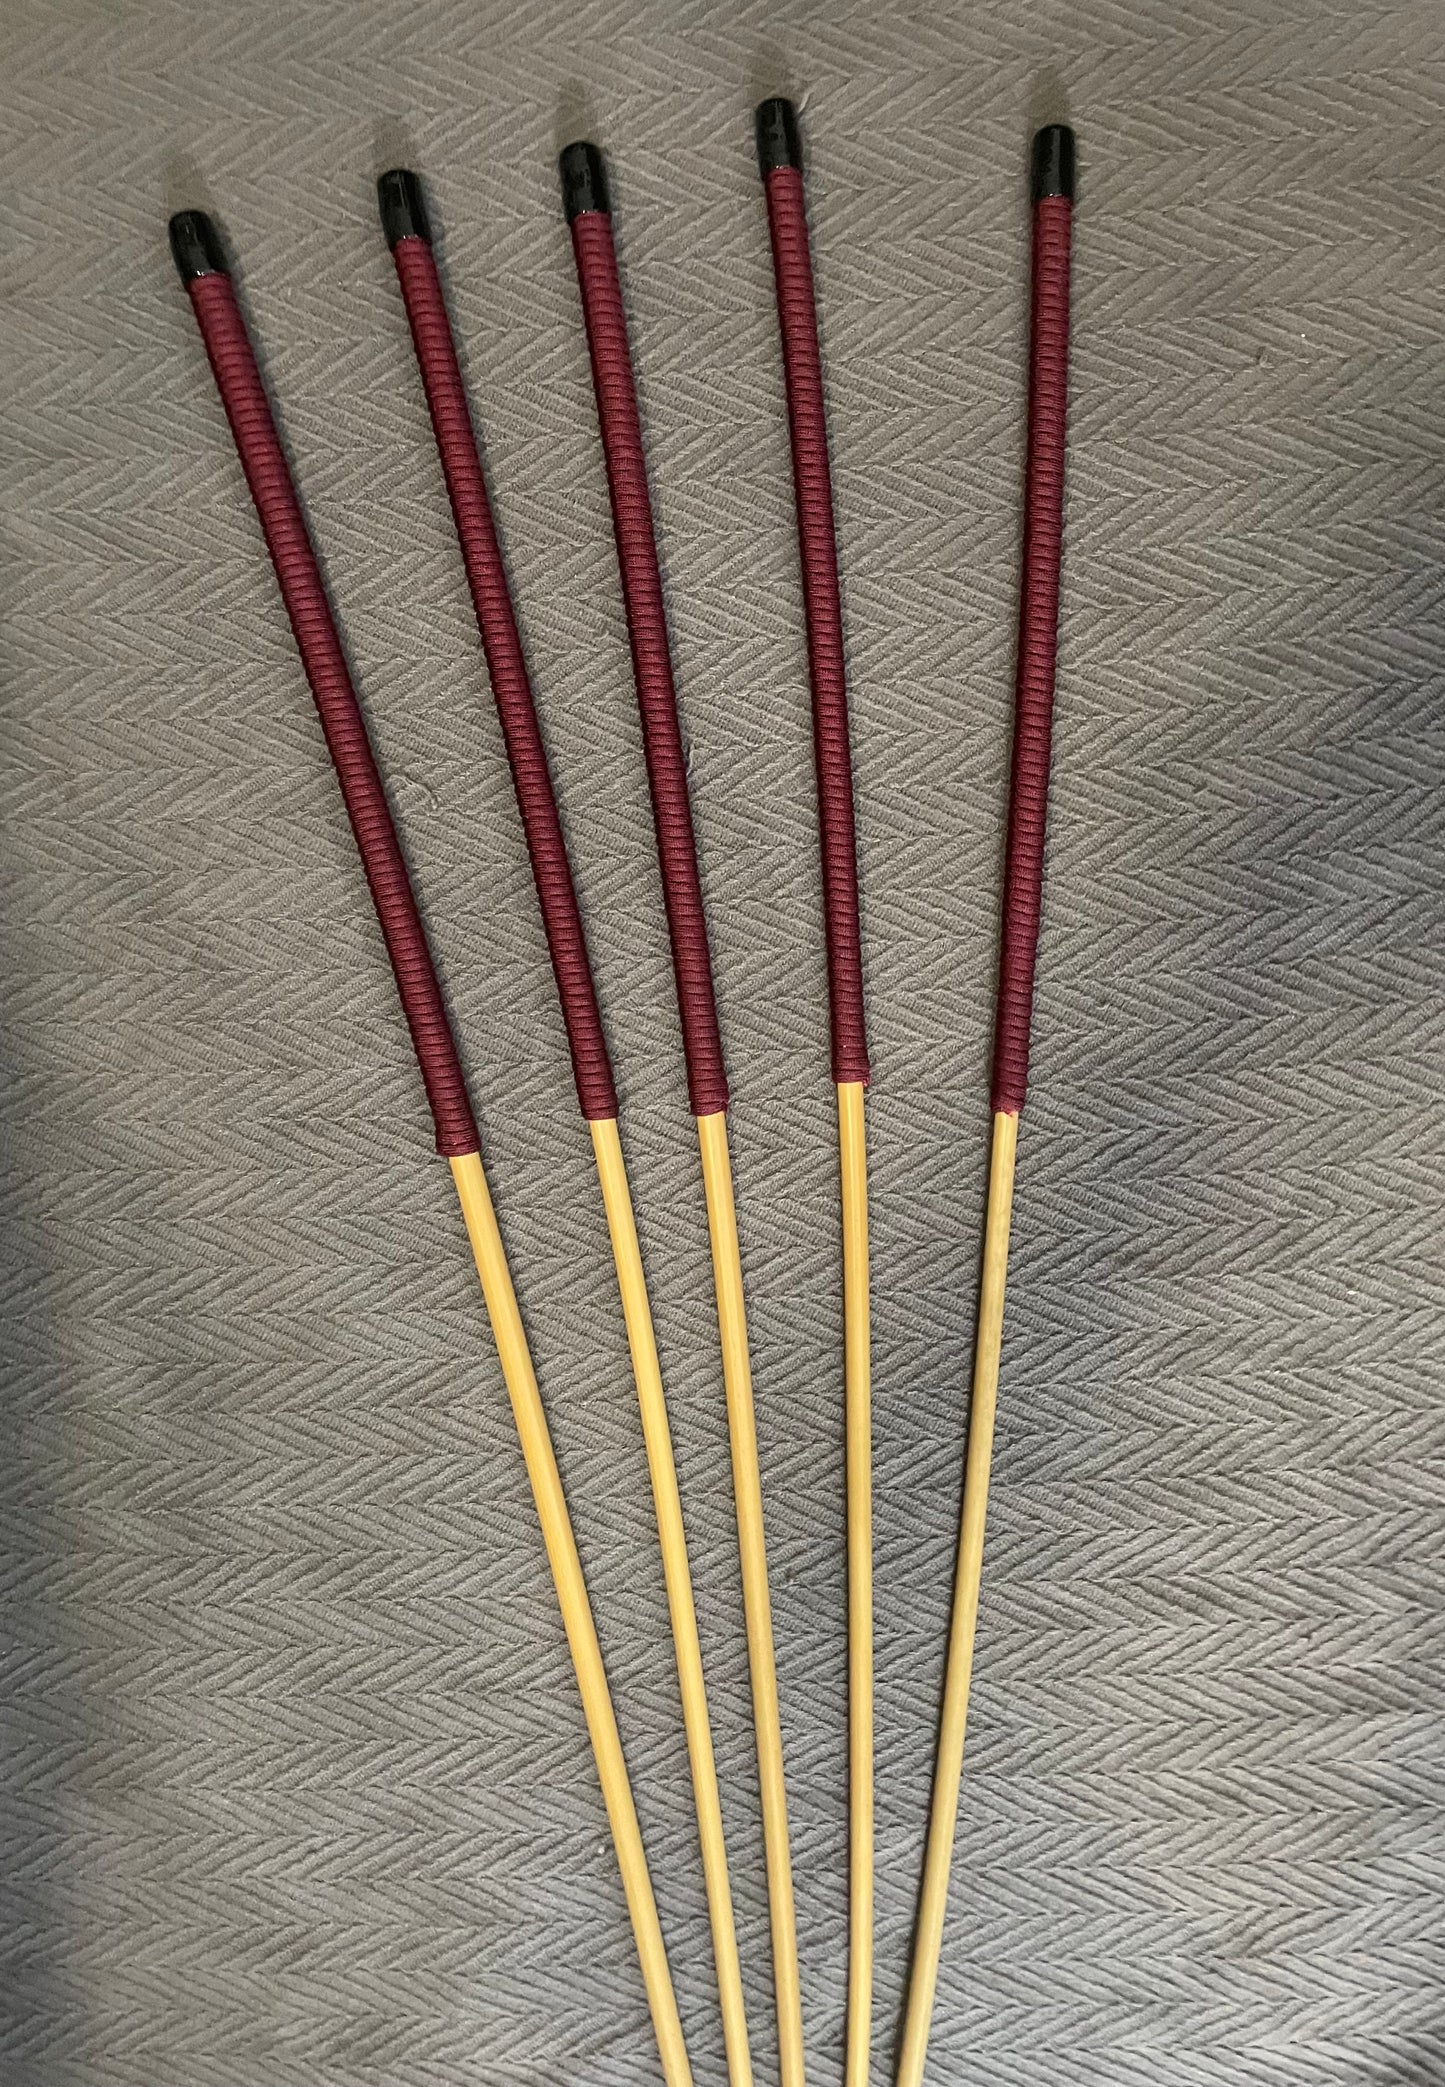 Set of 5 Knotless Dragon Canes / Ultimate Canes / No Knot Canes / BDSM Canes - 95 cms Length - Burgundy Paracord Handles